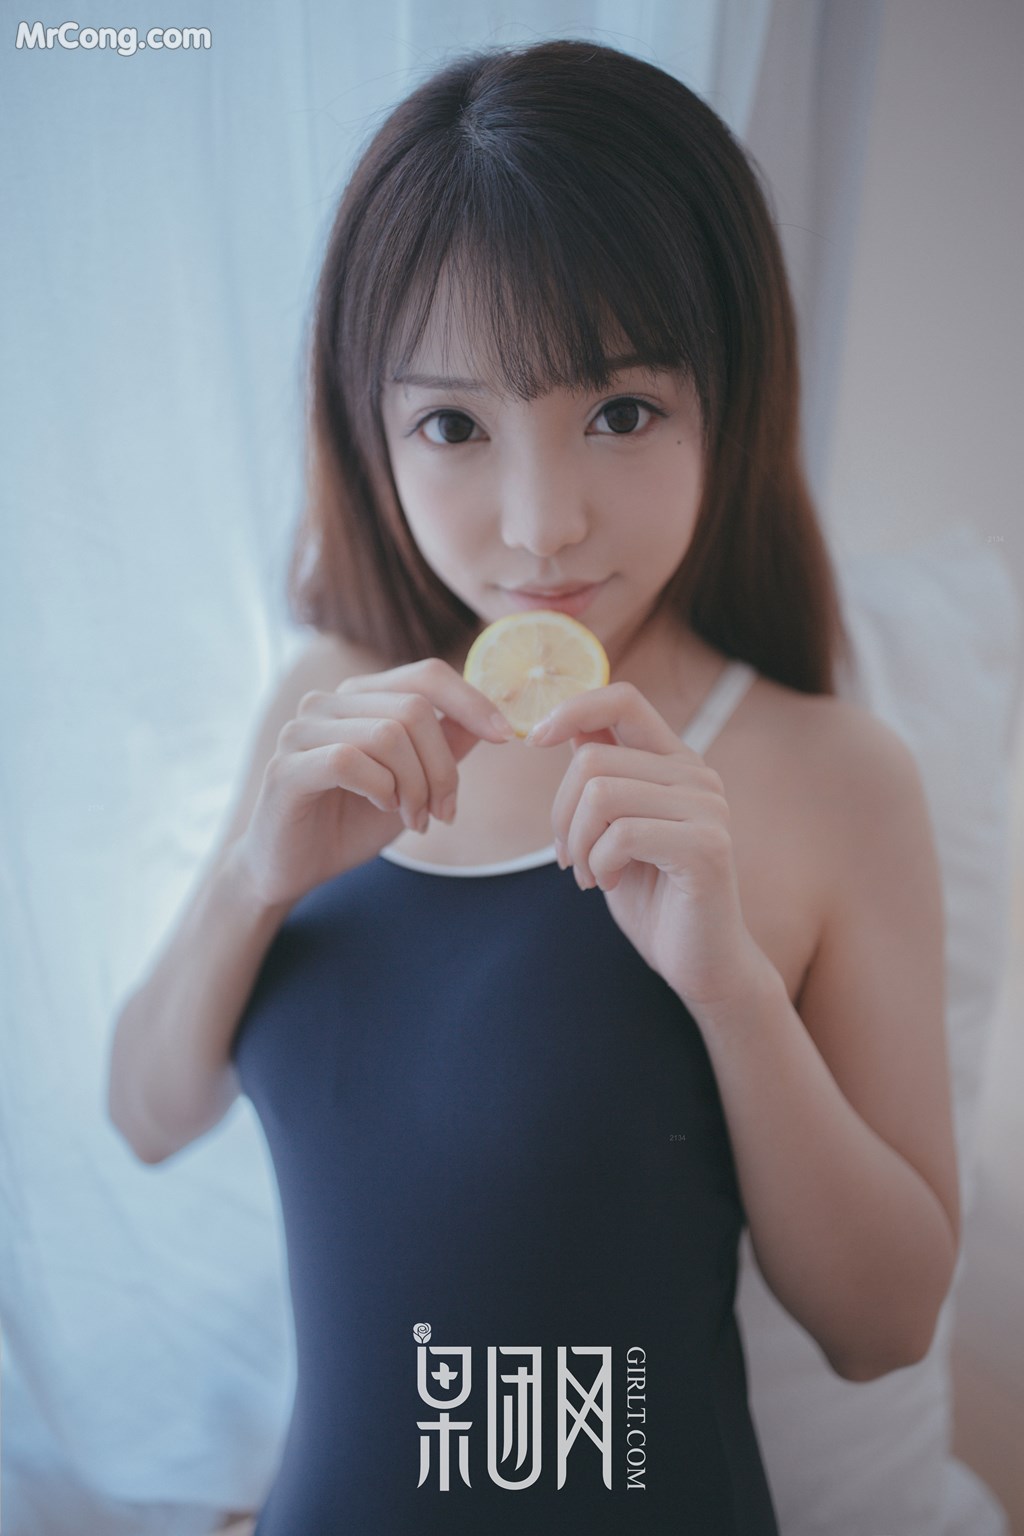 GIRLT XCJX No.028 水 花花 不是 水 哗哗 (57 pictures)